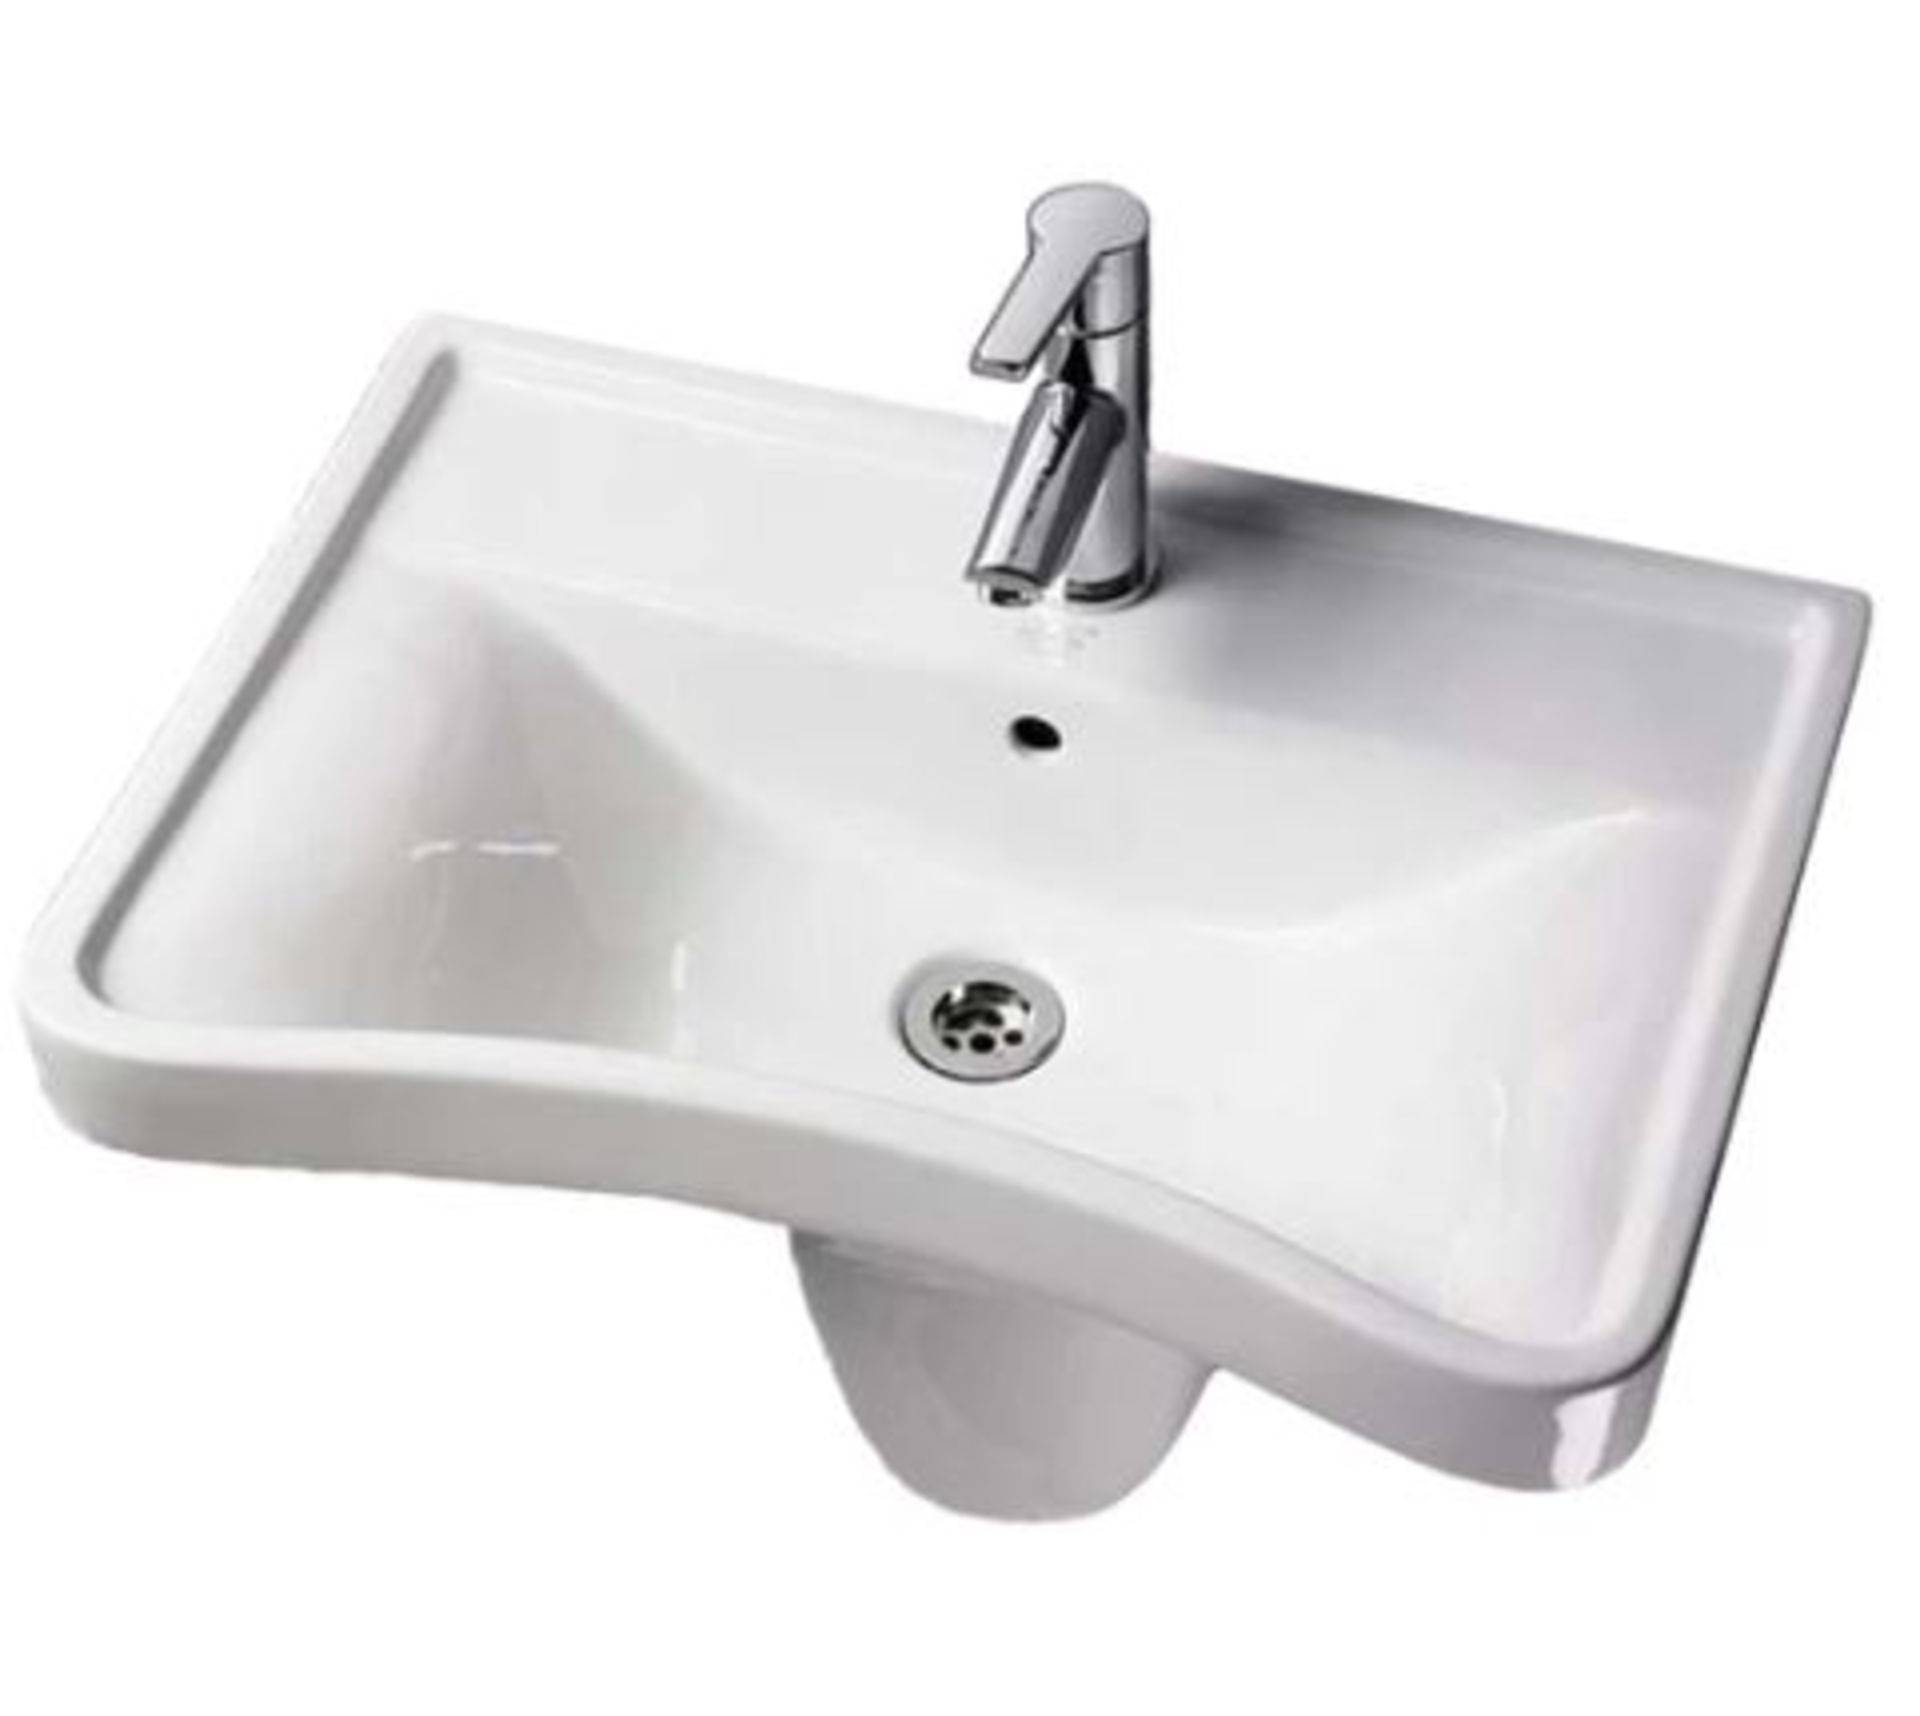 AKW B600 Wash Basin Only, White - Image 2 of 9